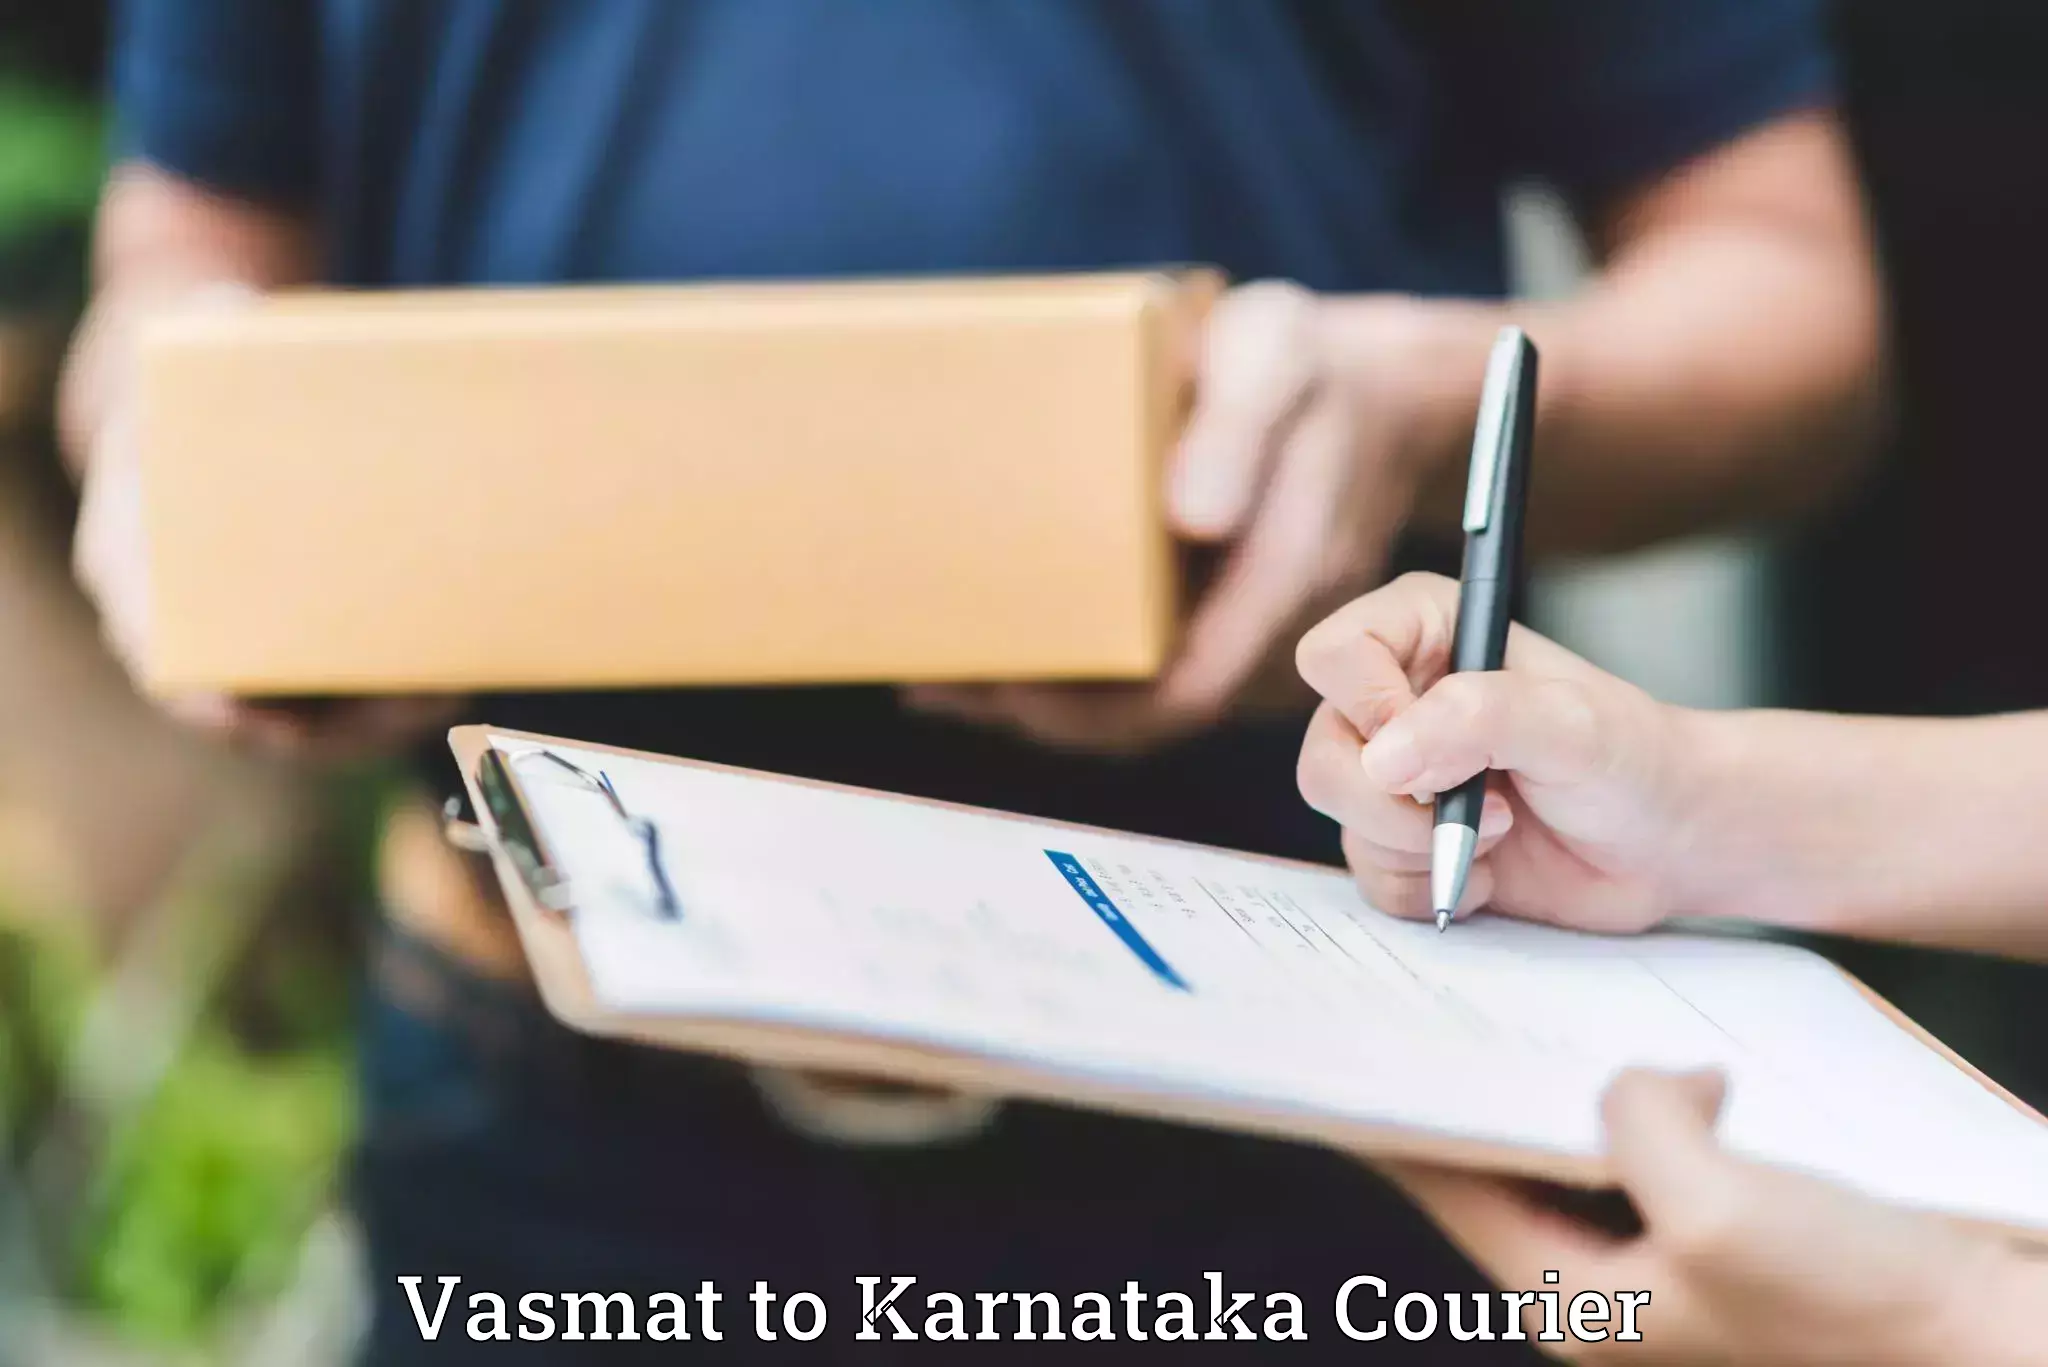 Baggage transport technology Vasmat to Karnataka